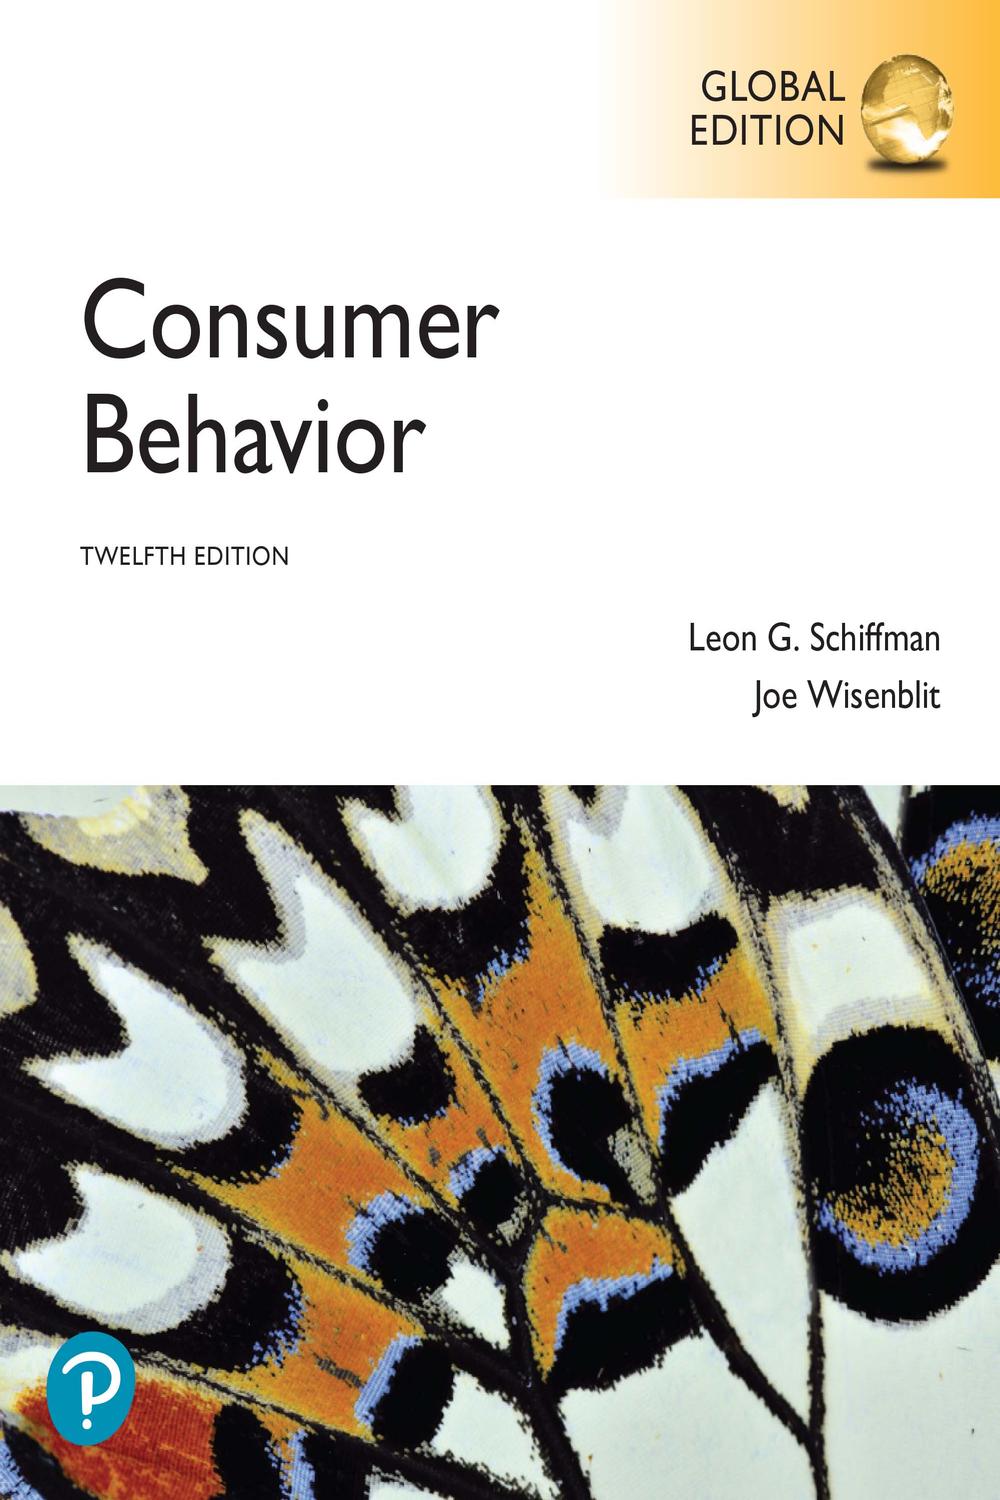 PDF] Consumer Behavior, Global Edition by Leon G. Schiffman eBook